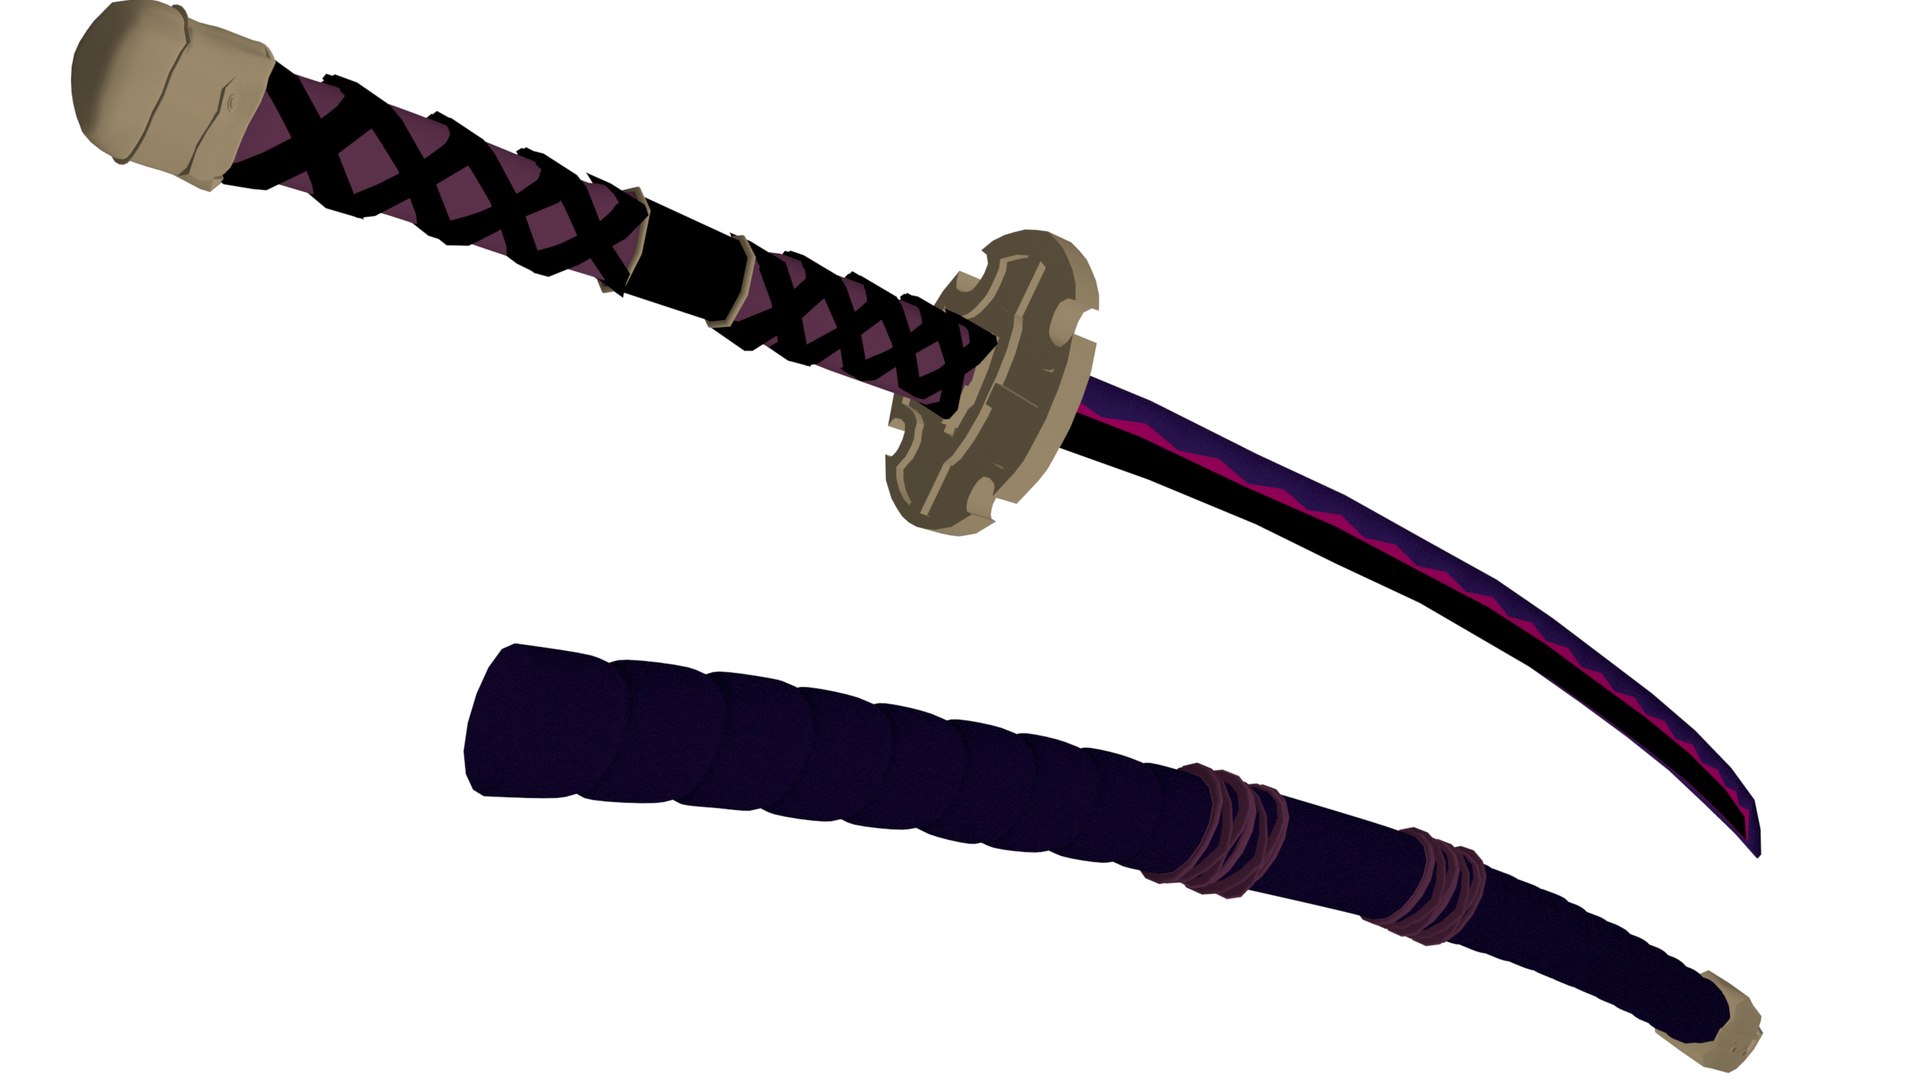 3D print Yoru Sword - Mihawk Weapon High Quality - One Piece Live